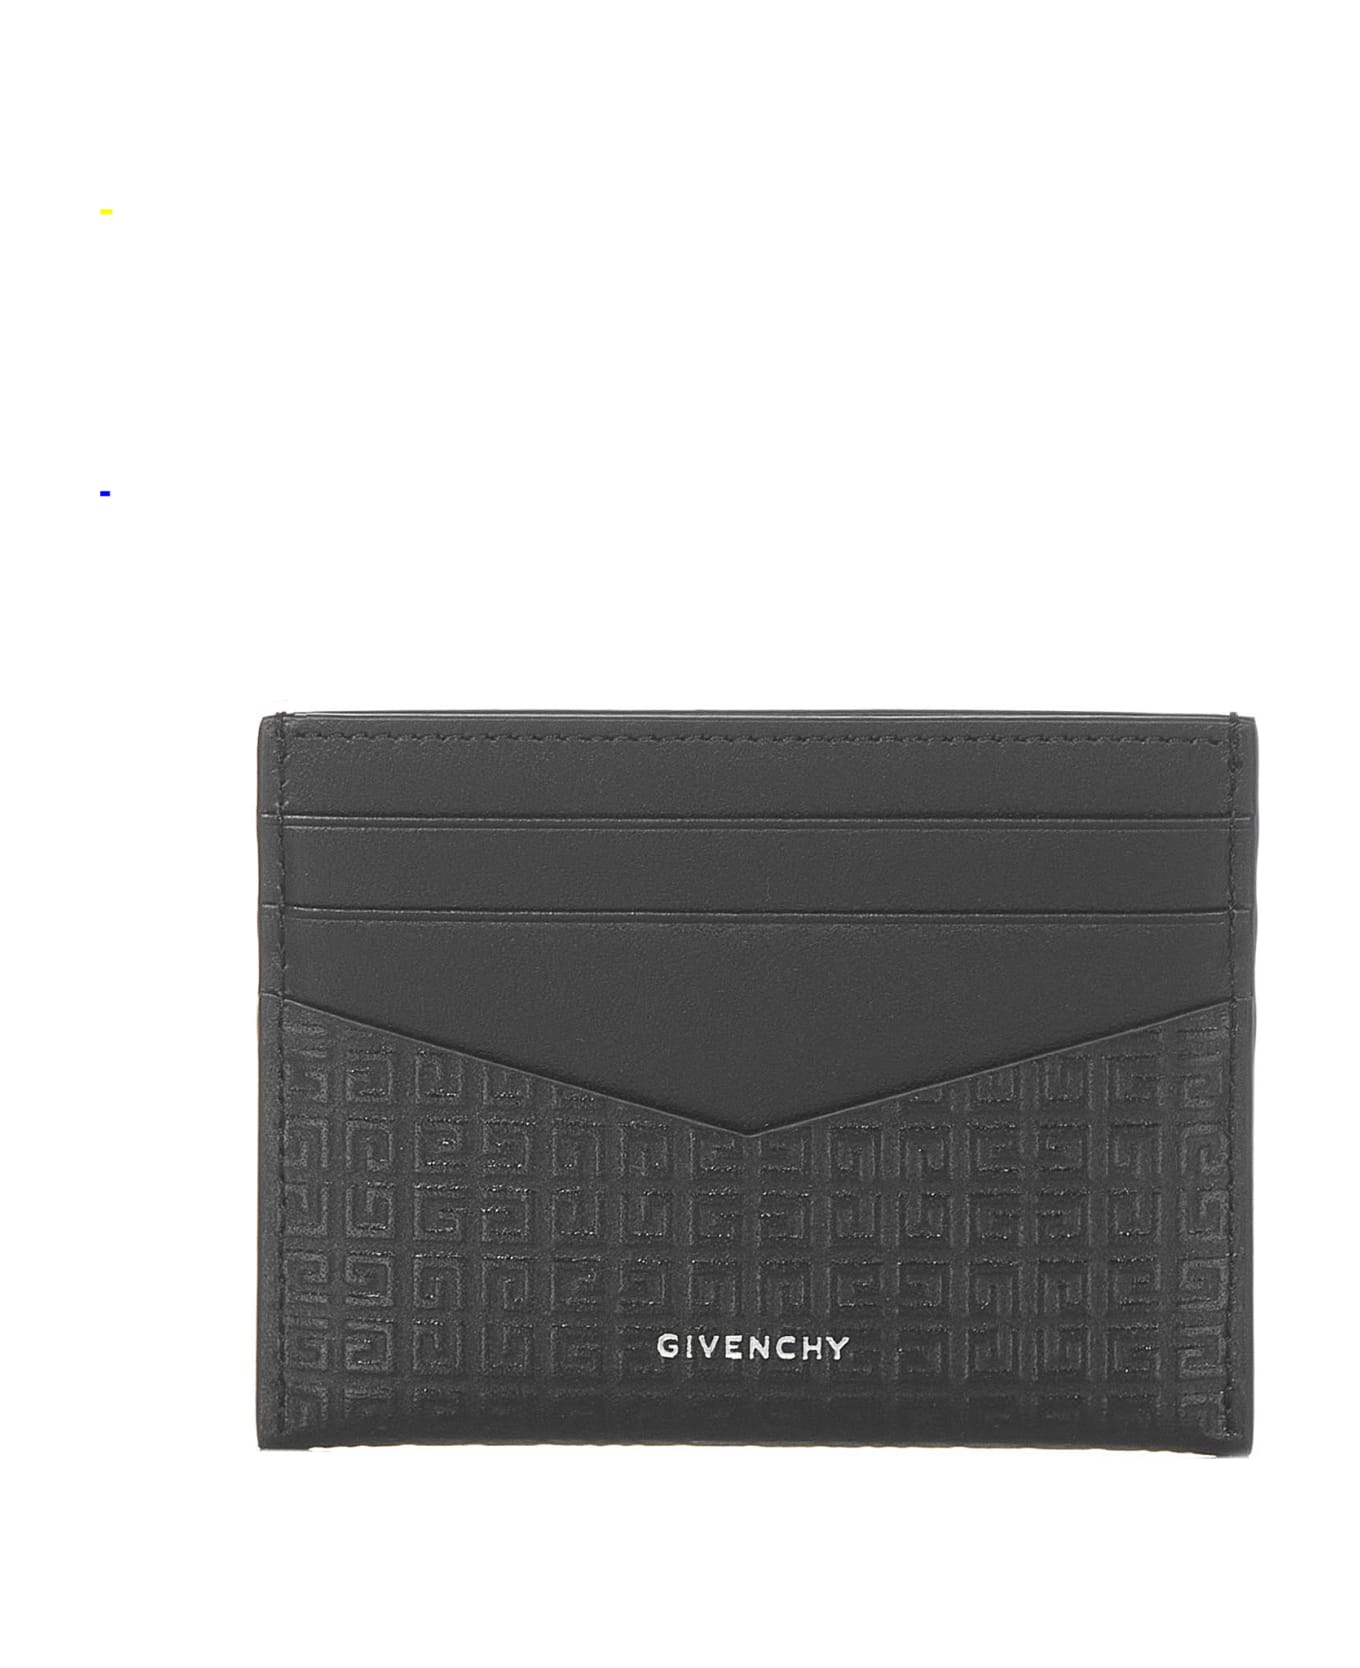 Givenchy Card Holder - NERO 財布